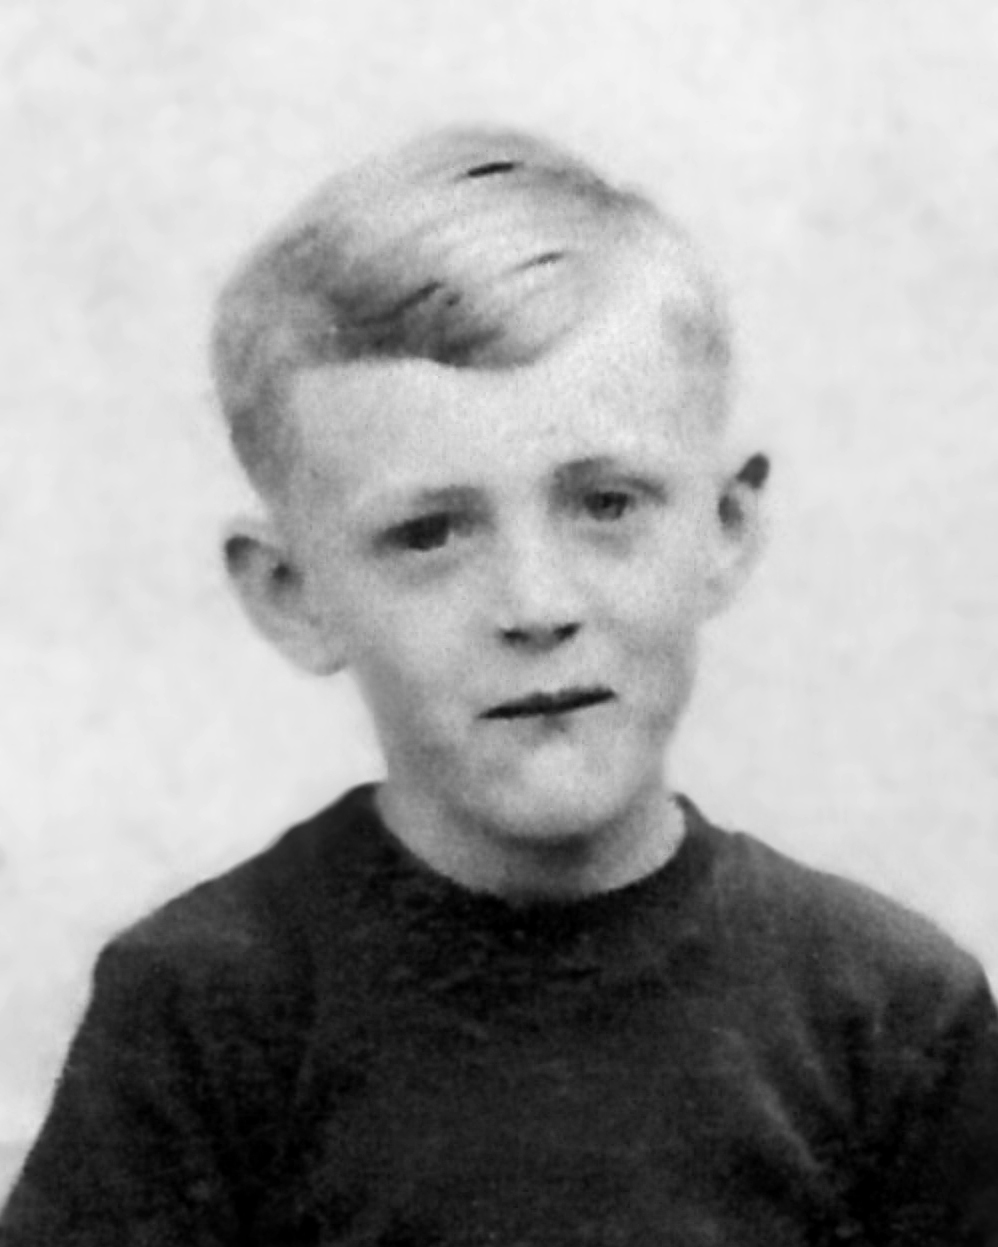 Jan Kreysa in his childhood